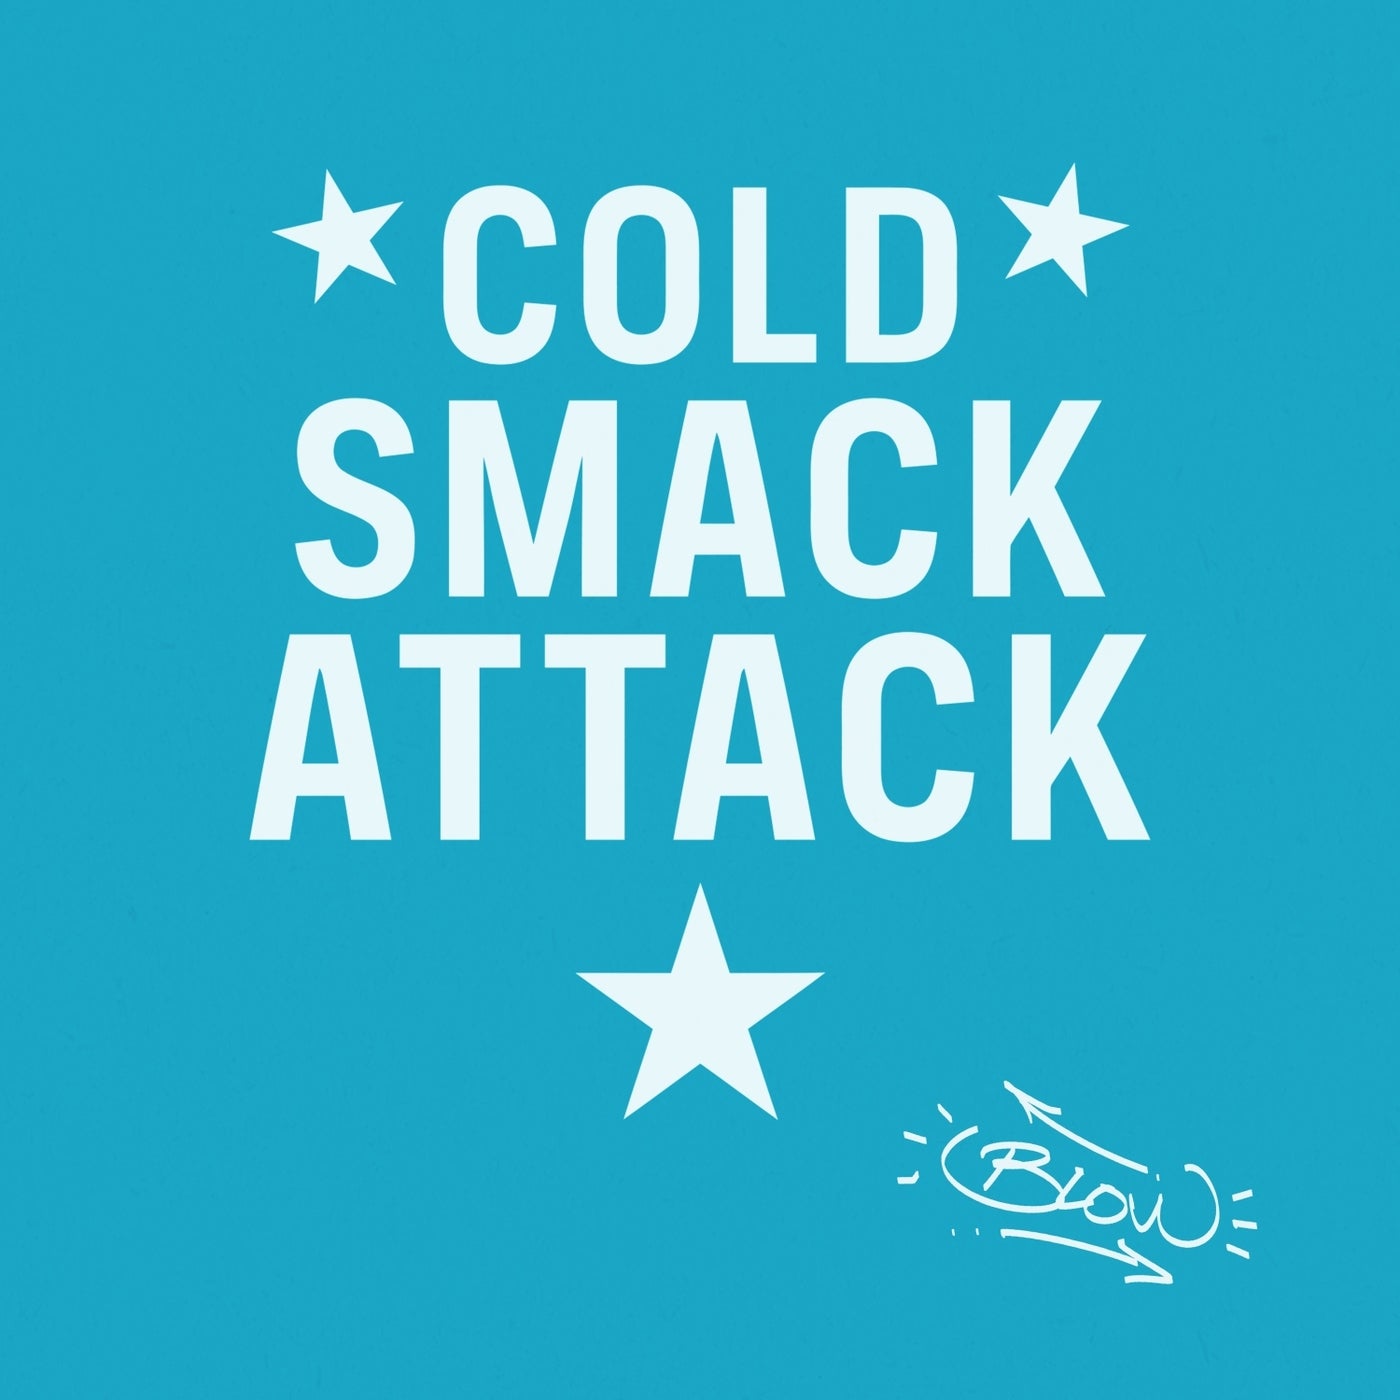 Cold Smack Attack - Blow [BIGBALL011]